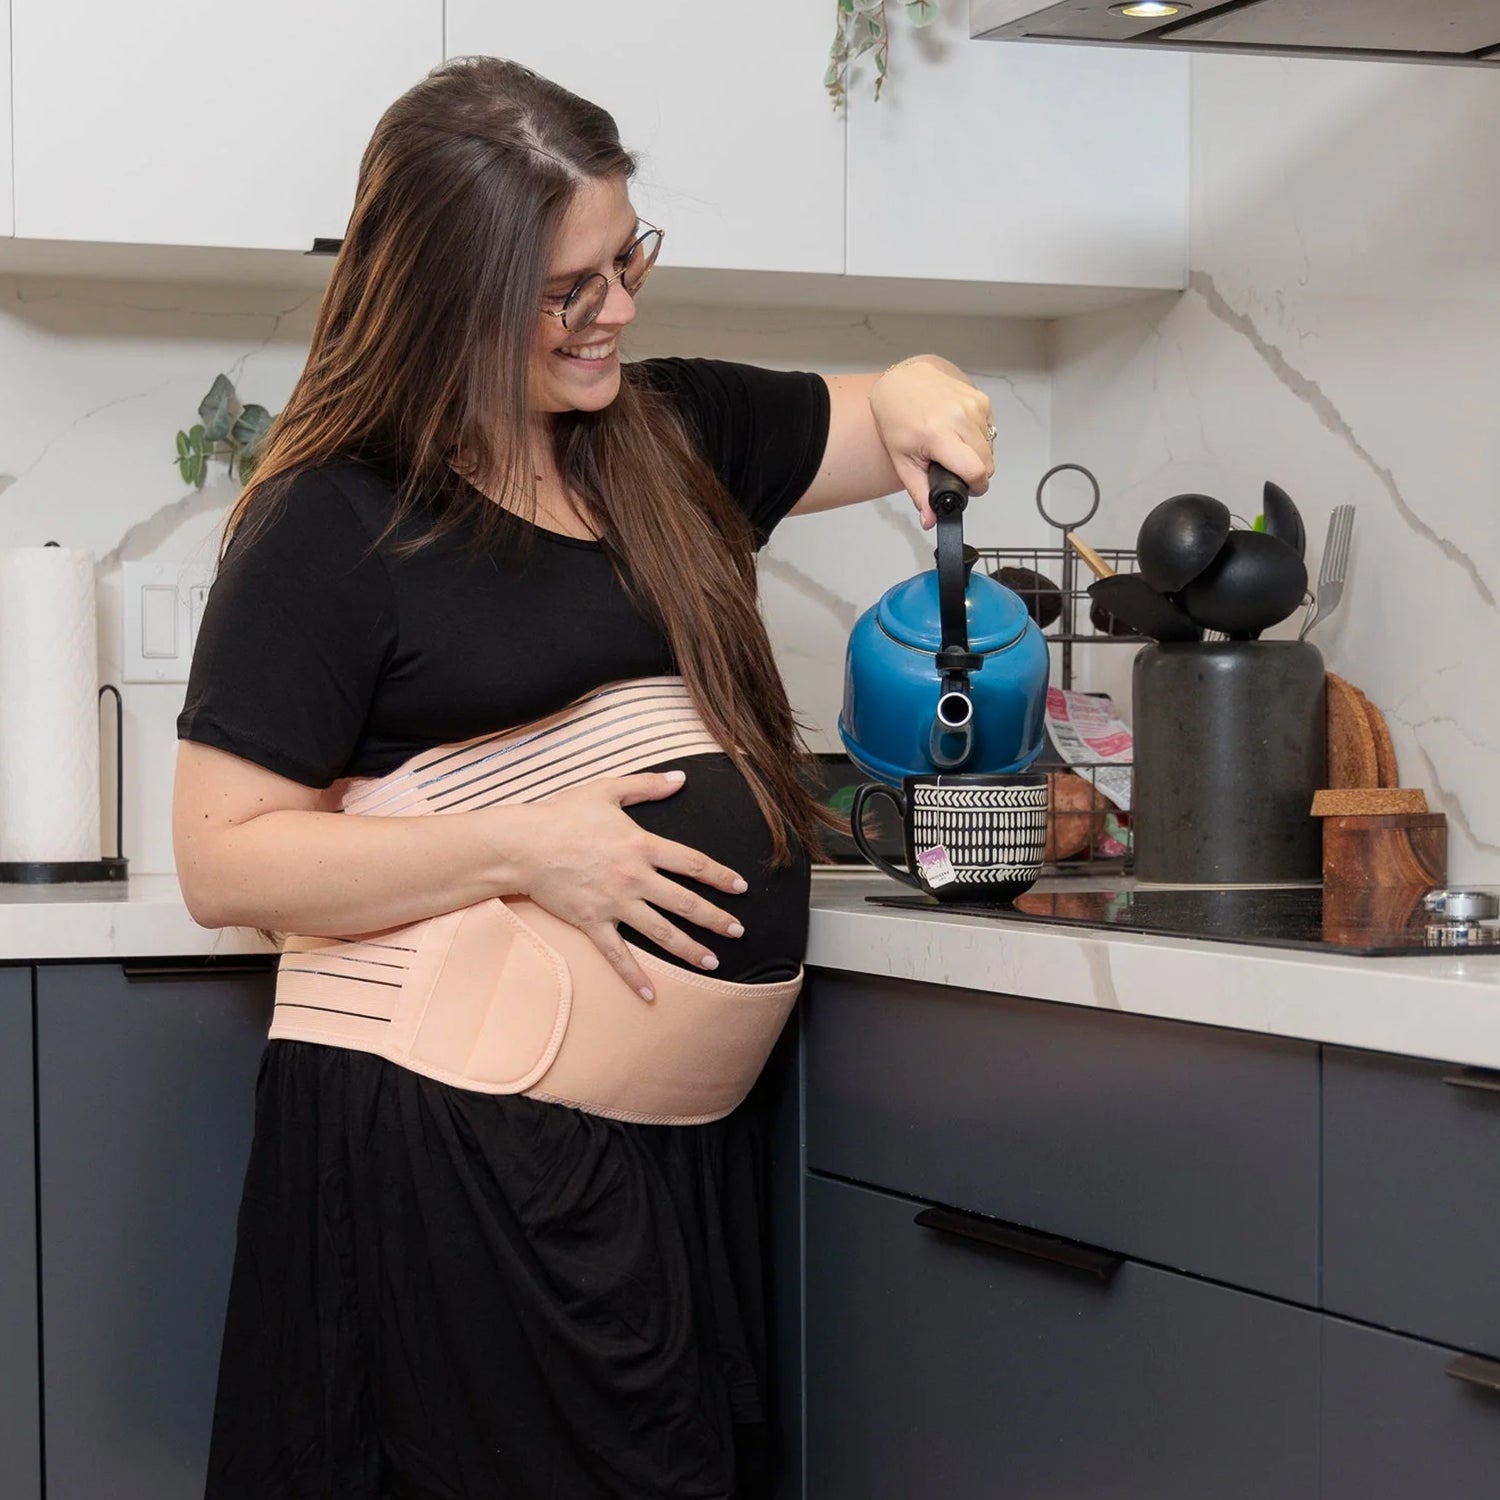 Mammy Village Pregnancy Belly Support Belt, Maternity Support Belt